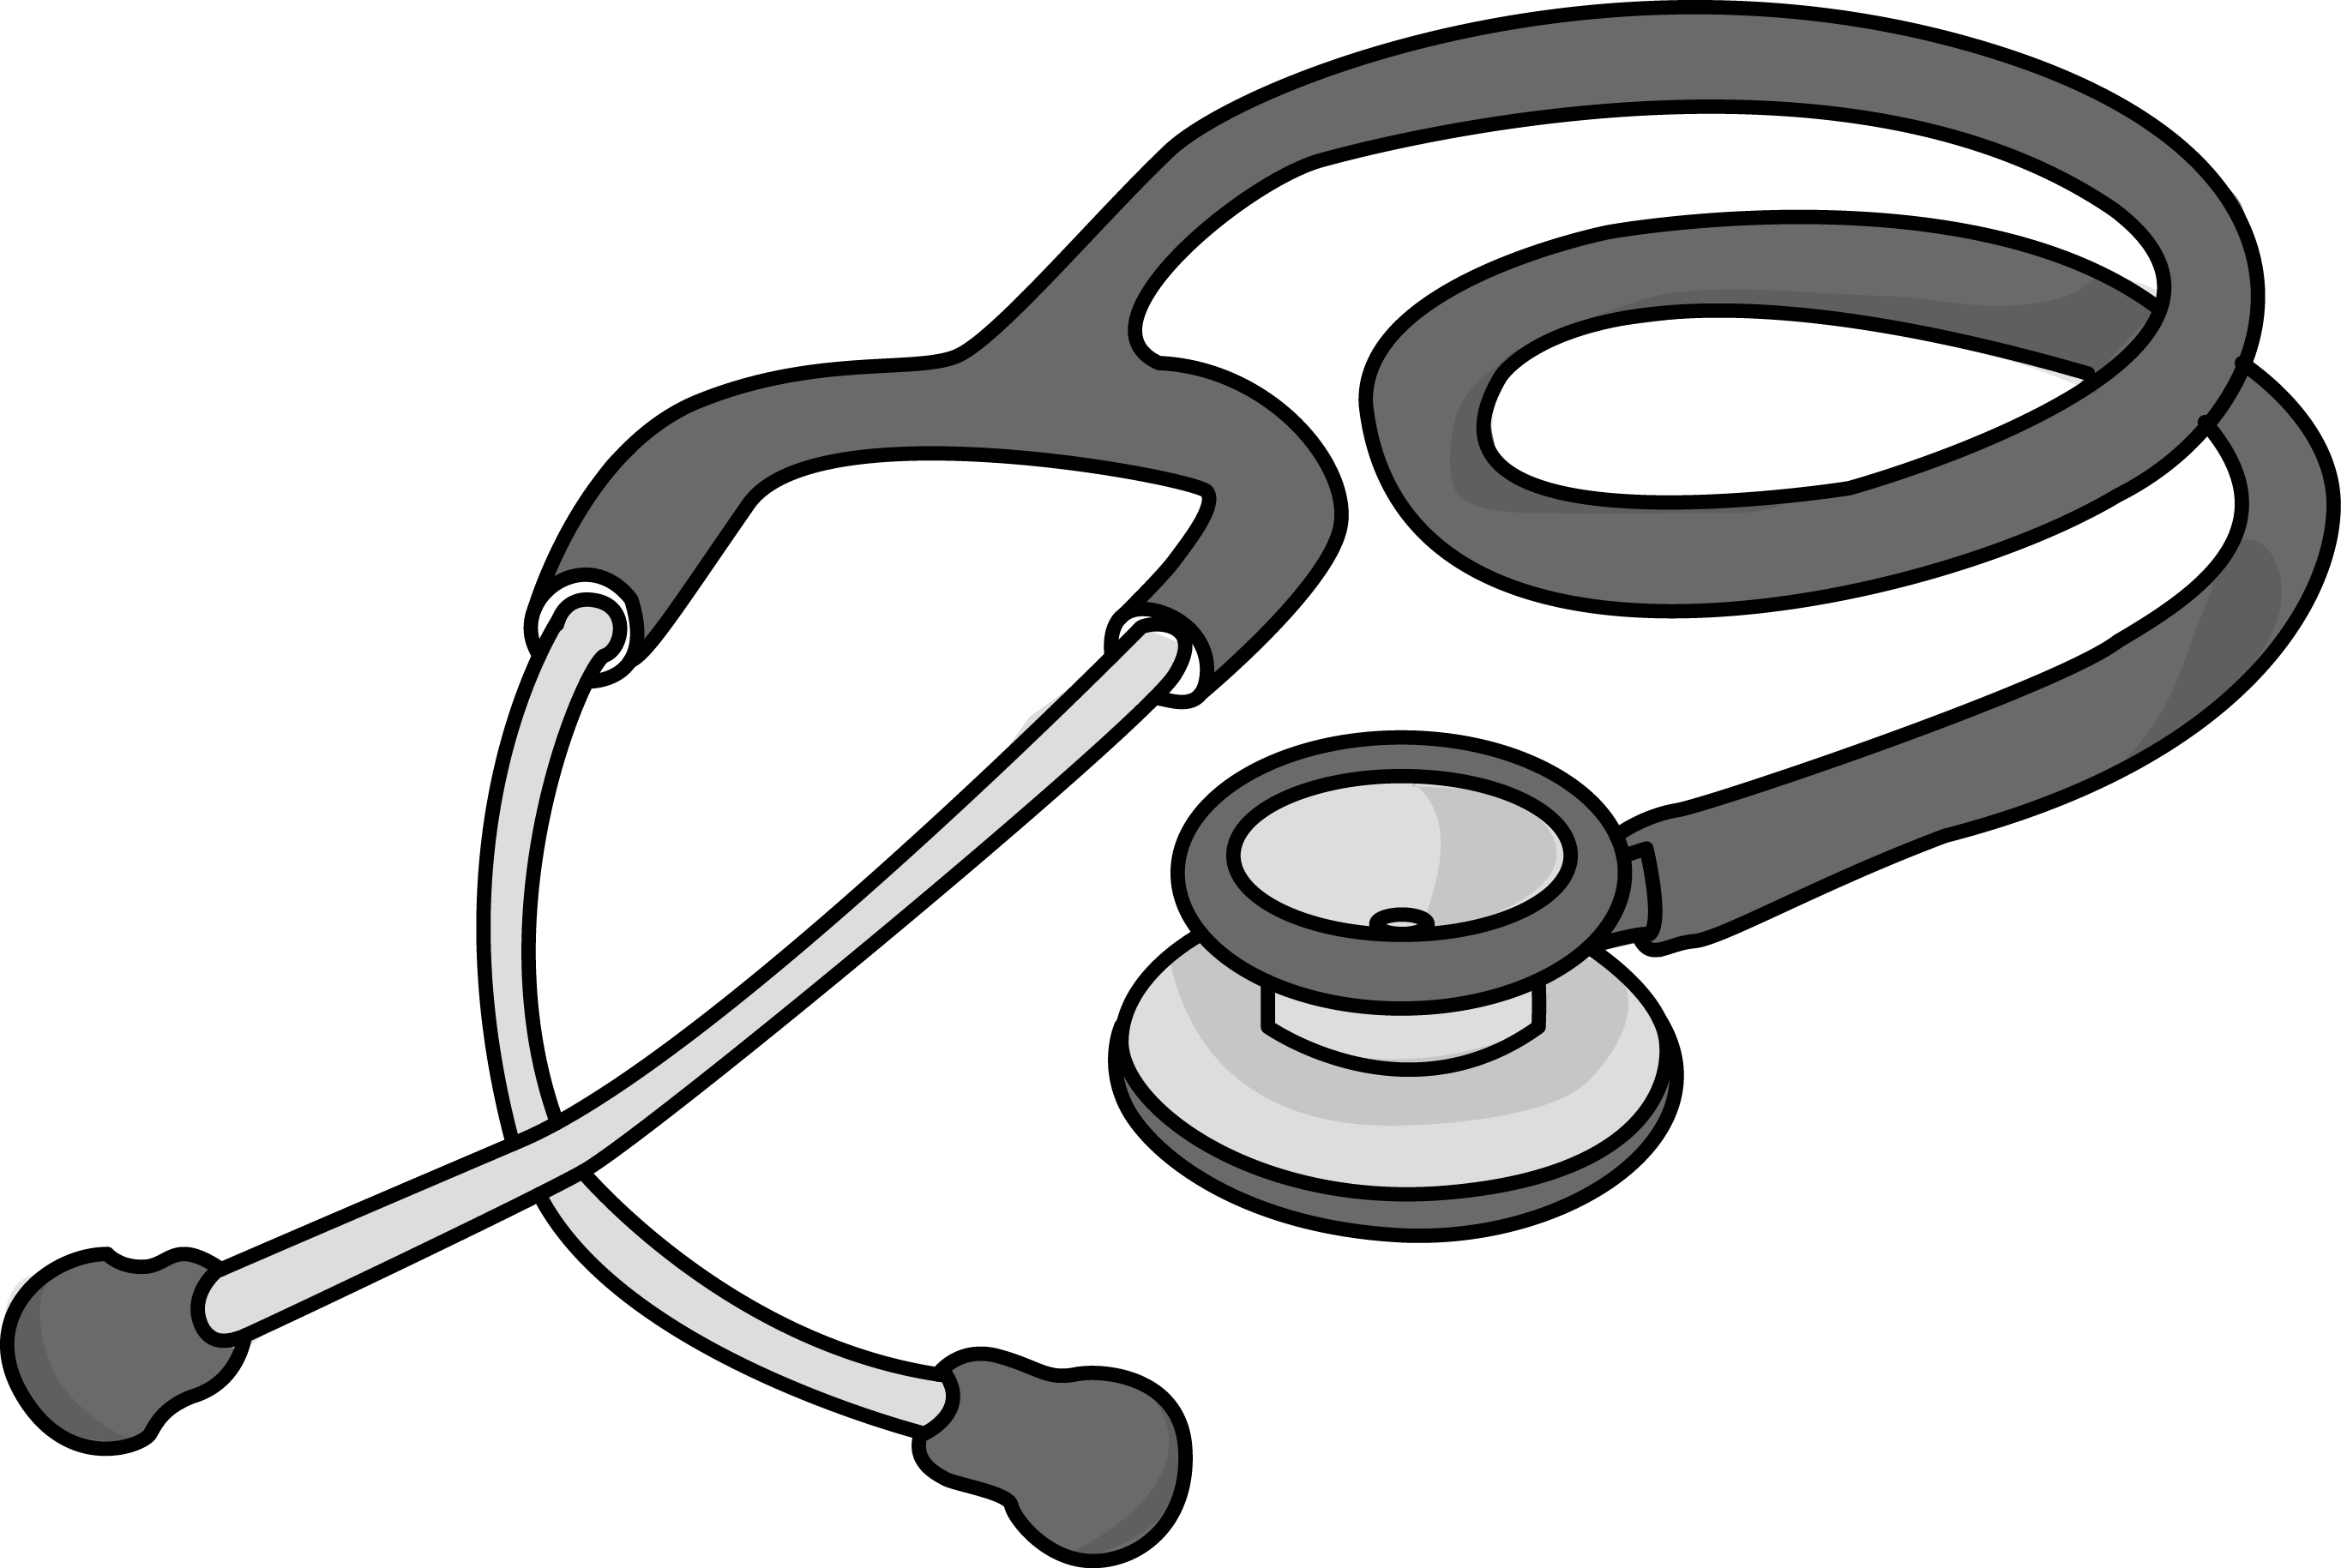 Nursing heartbeat stethoscope